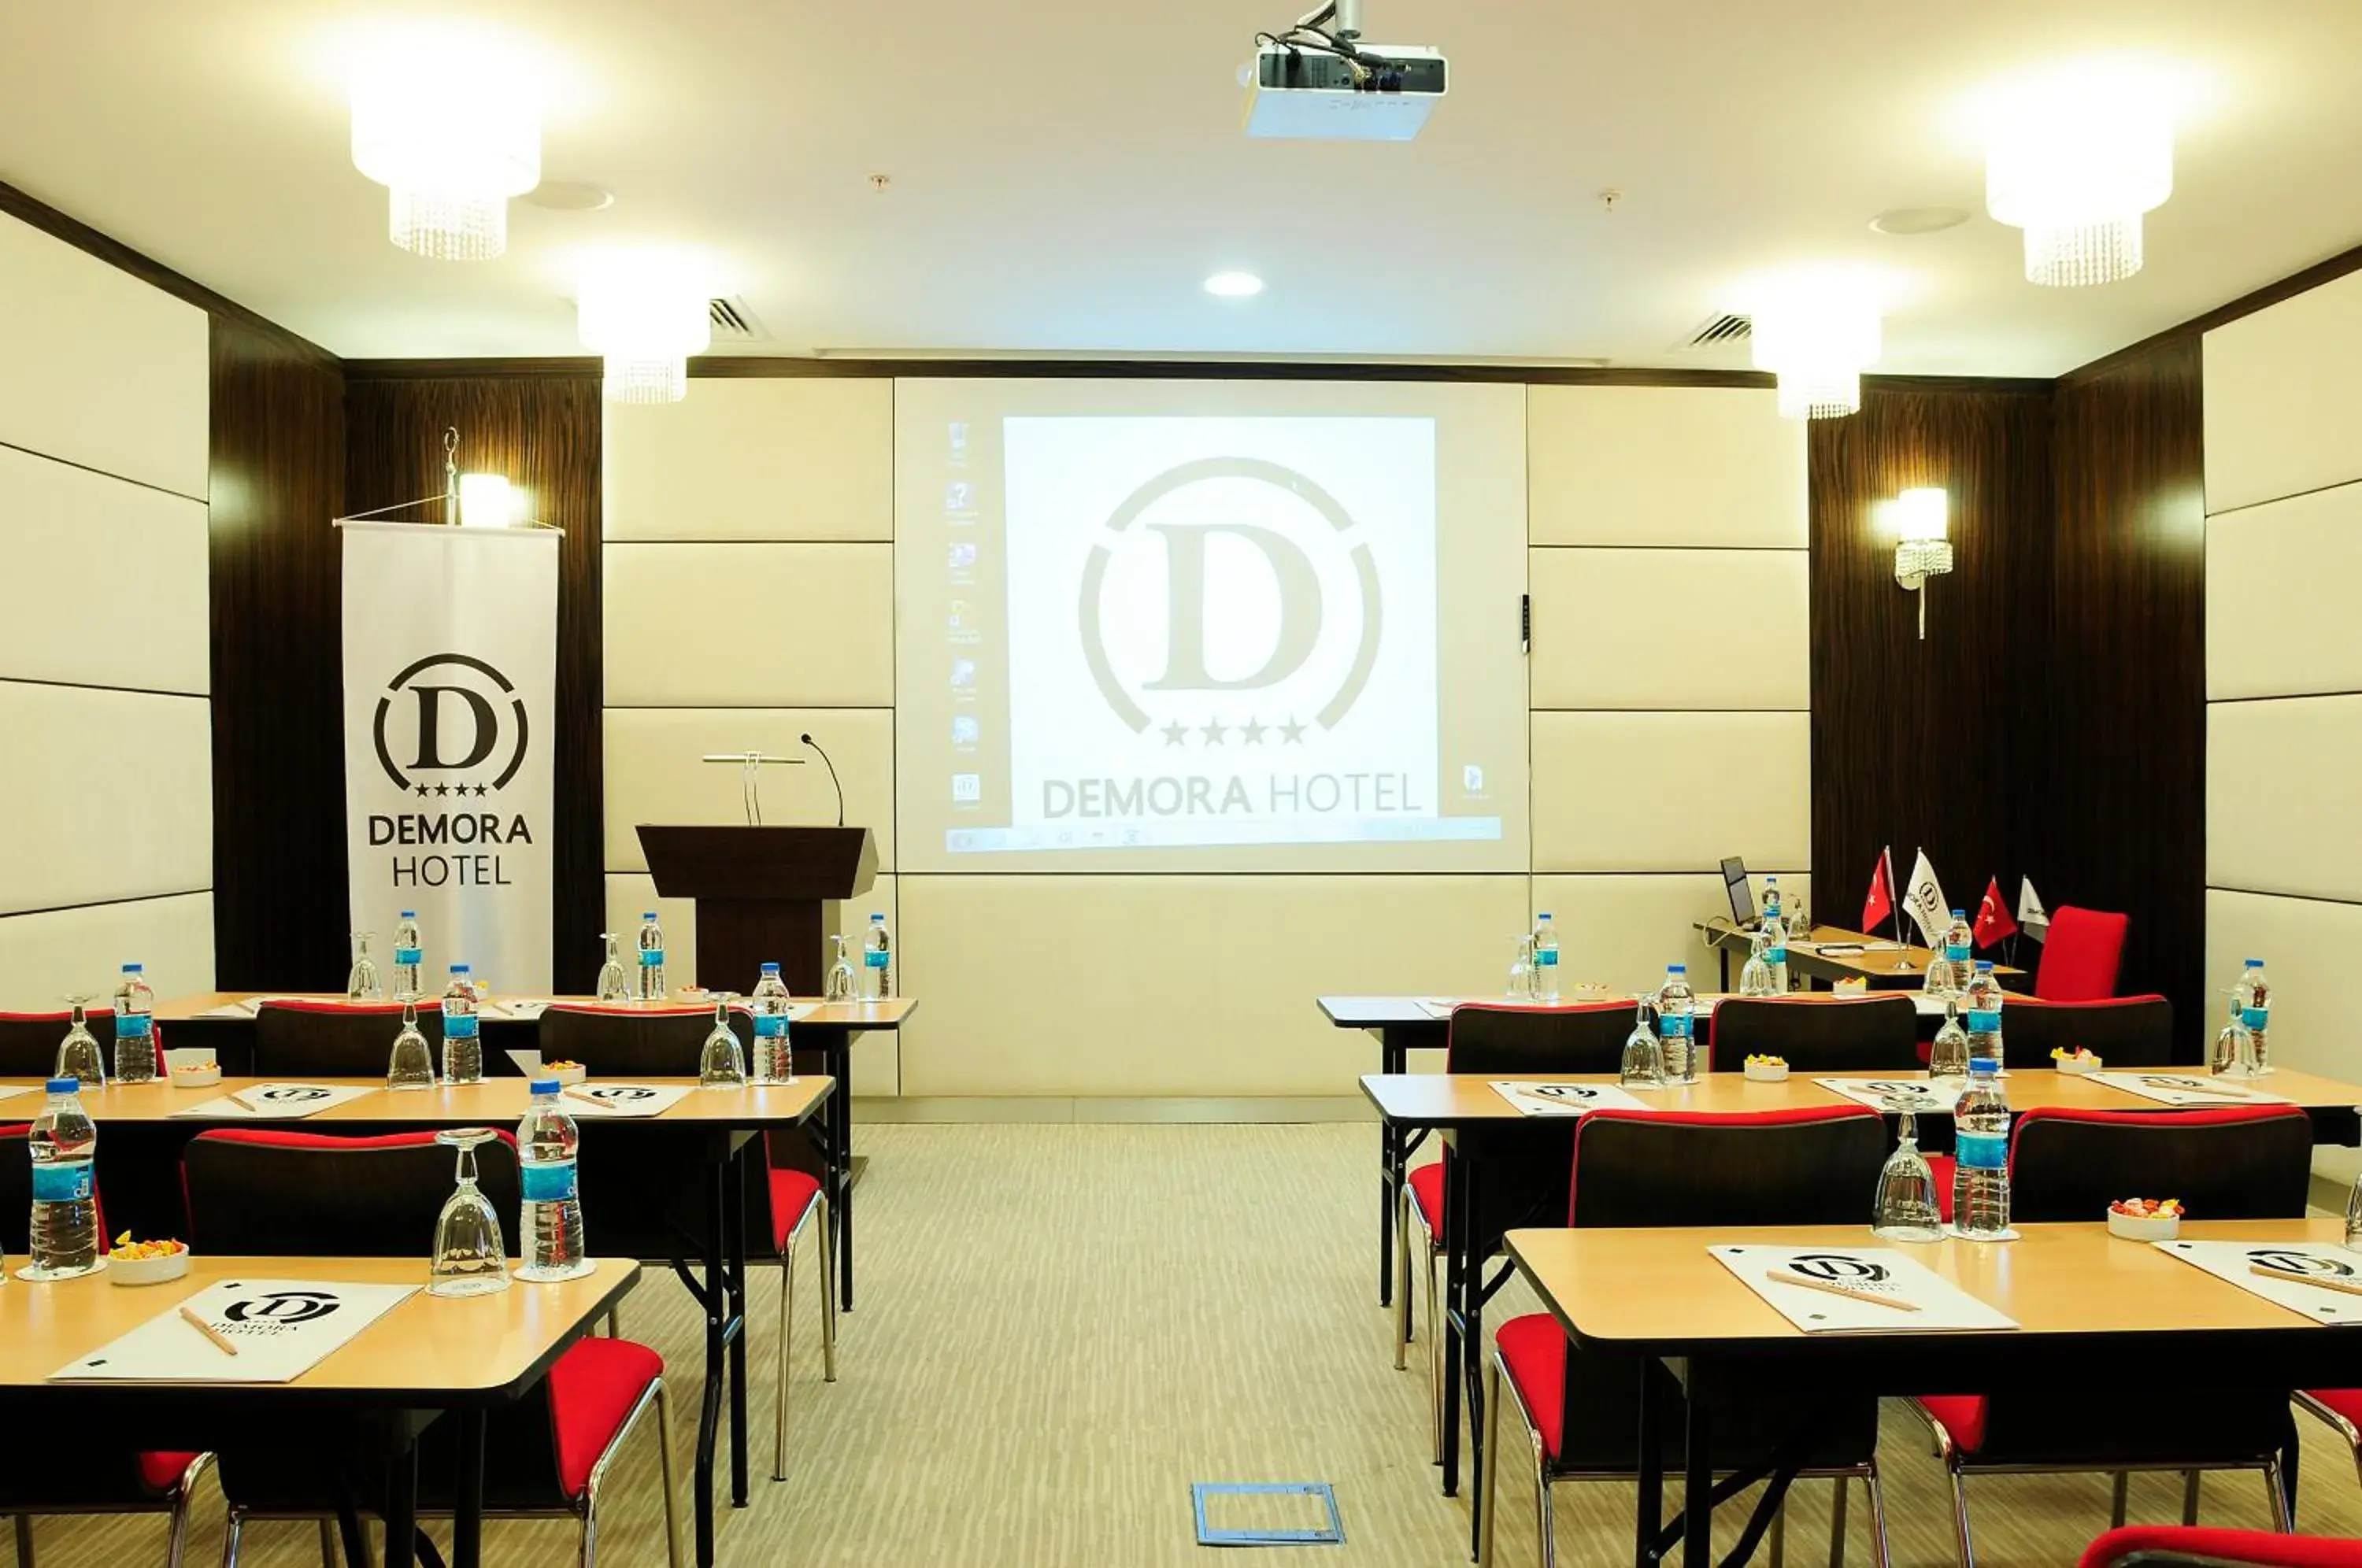 Business facilities in Demora Hotel